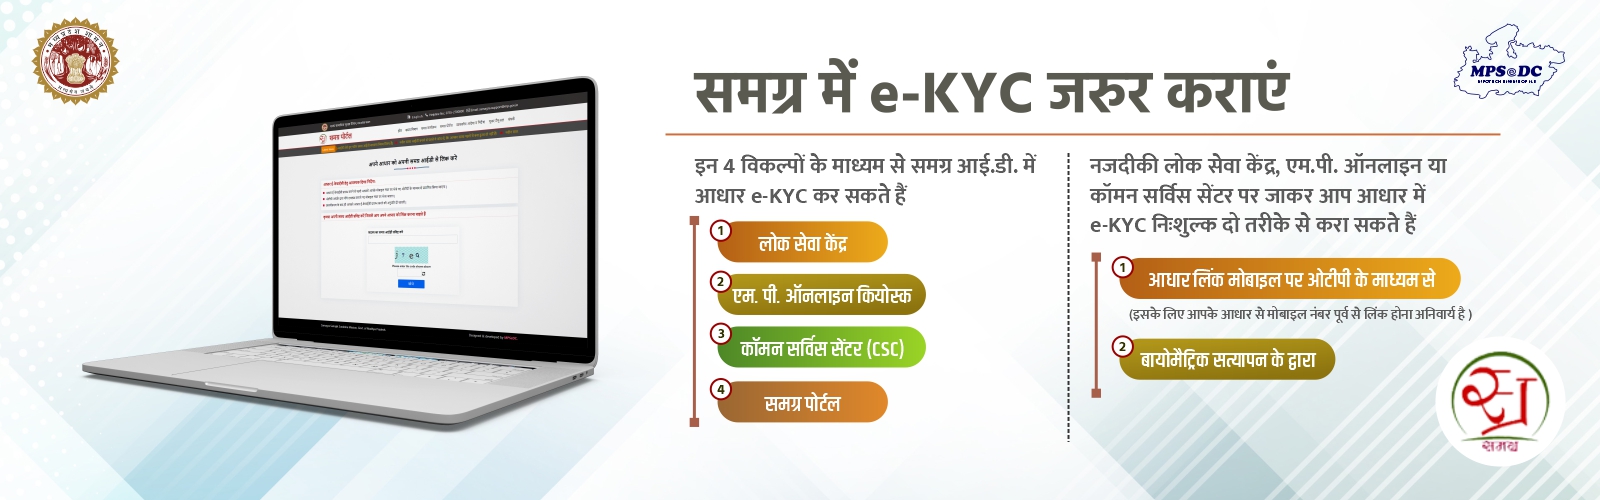 e-KYC Slide2